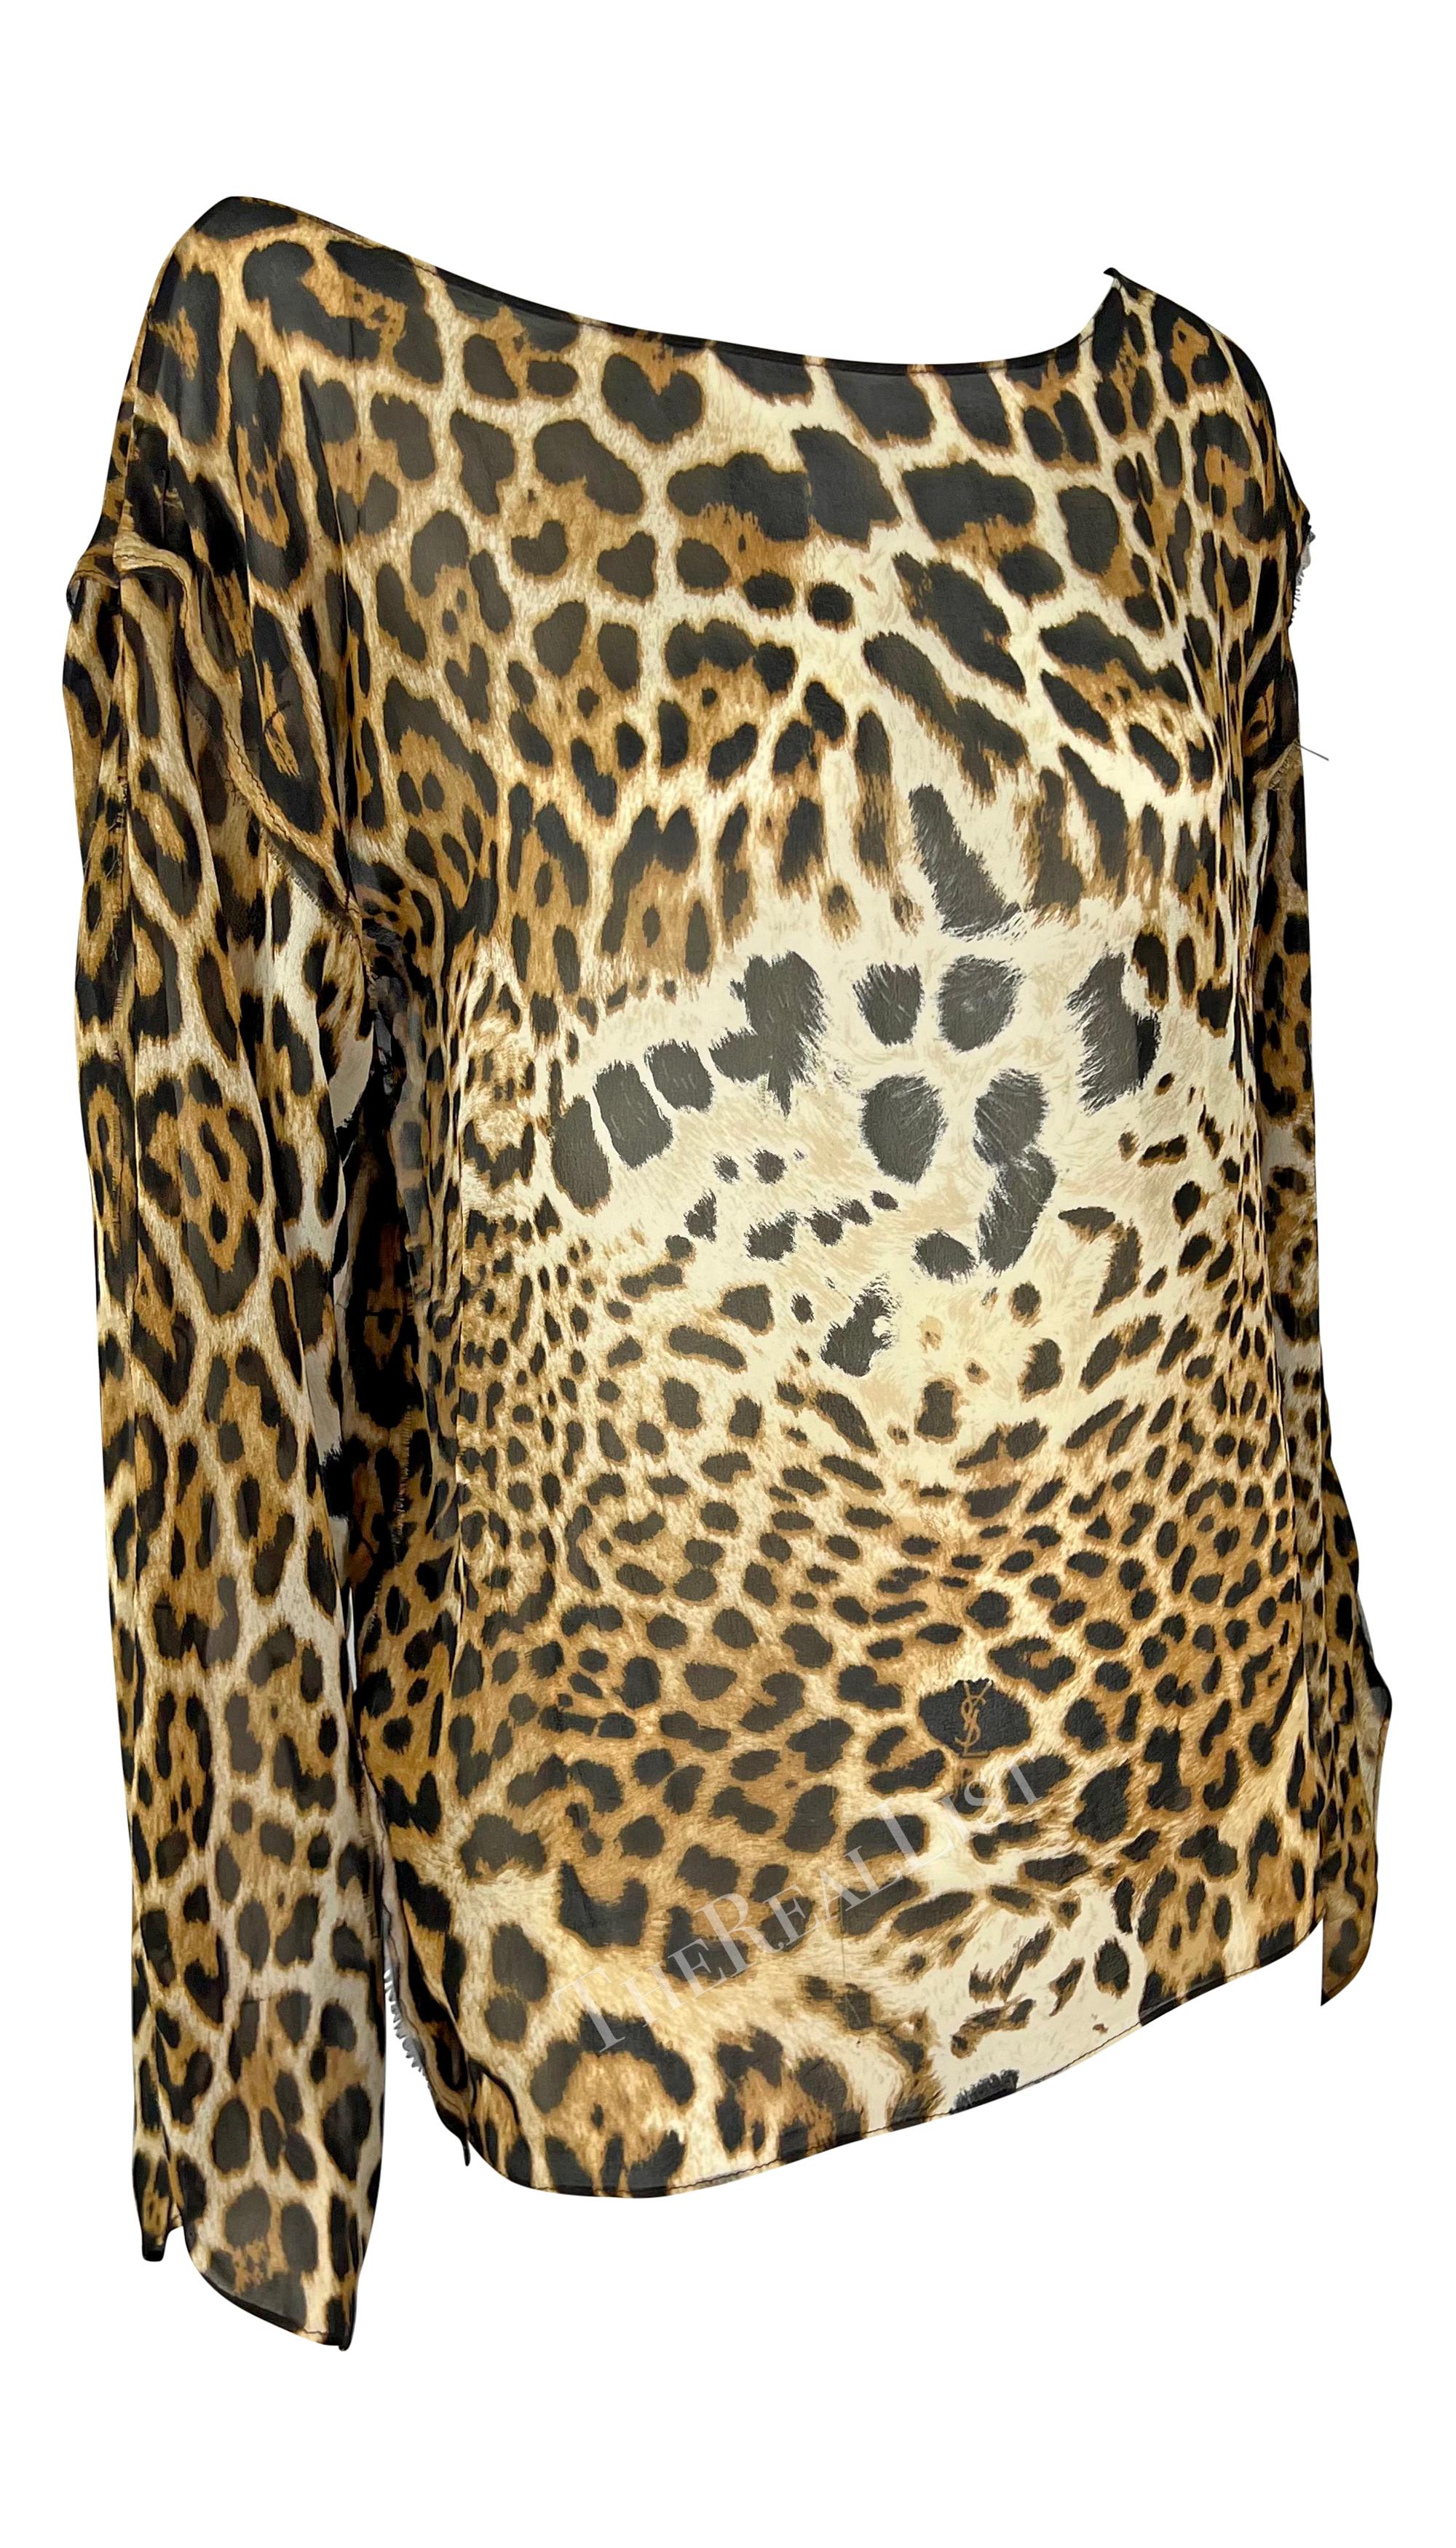 S/S 2002 Yves Saint Laurent by Tom Ford Safari Cheetah Print Sheer Silk Top For Sale 6